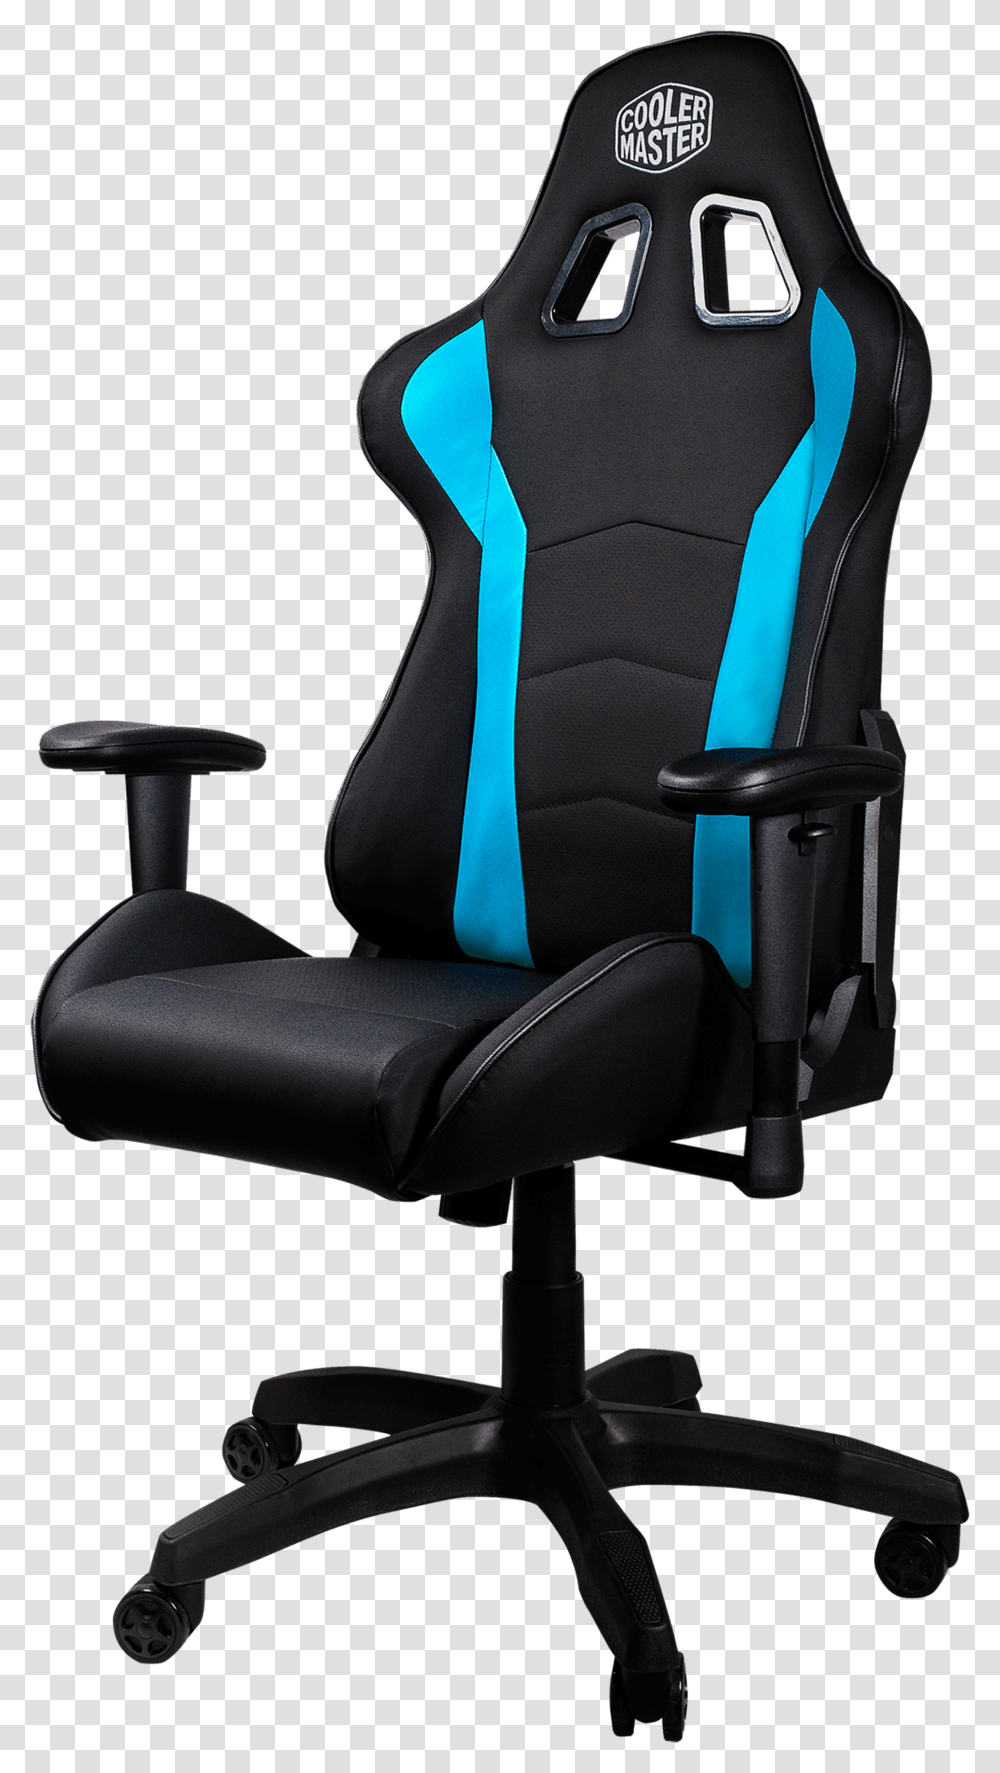 Cooler Master Caliber R1 Gaming Chair Transparent Png